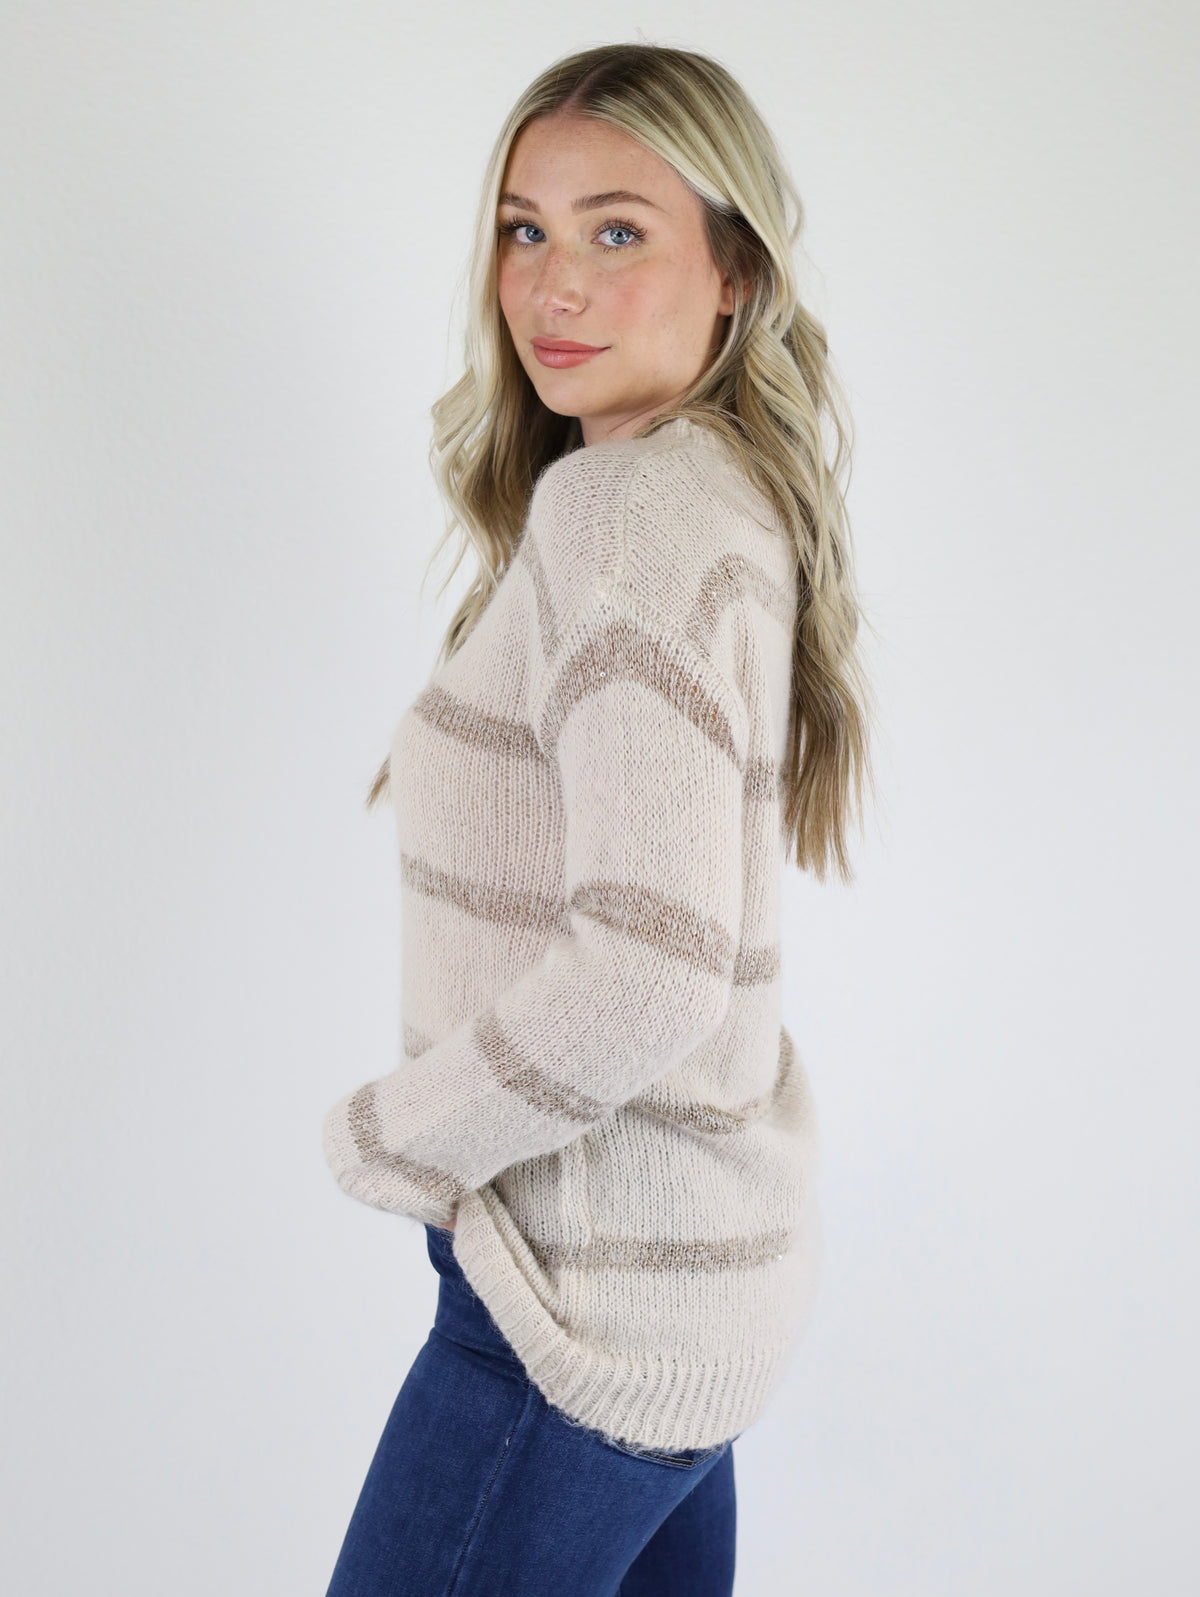 Lizzy Striped Sweater